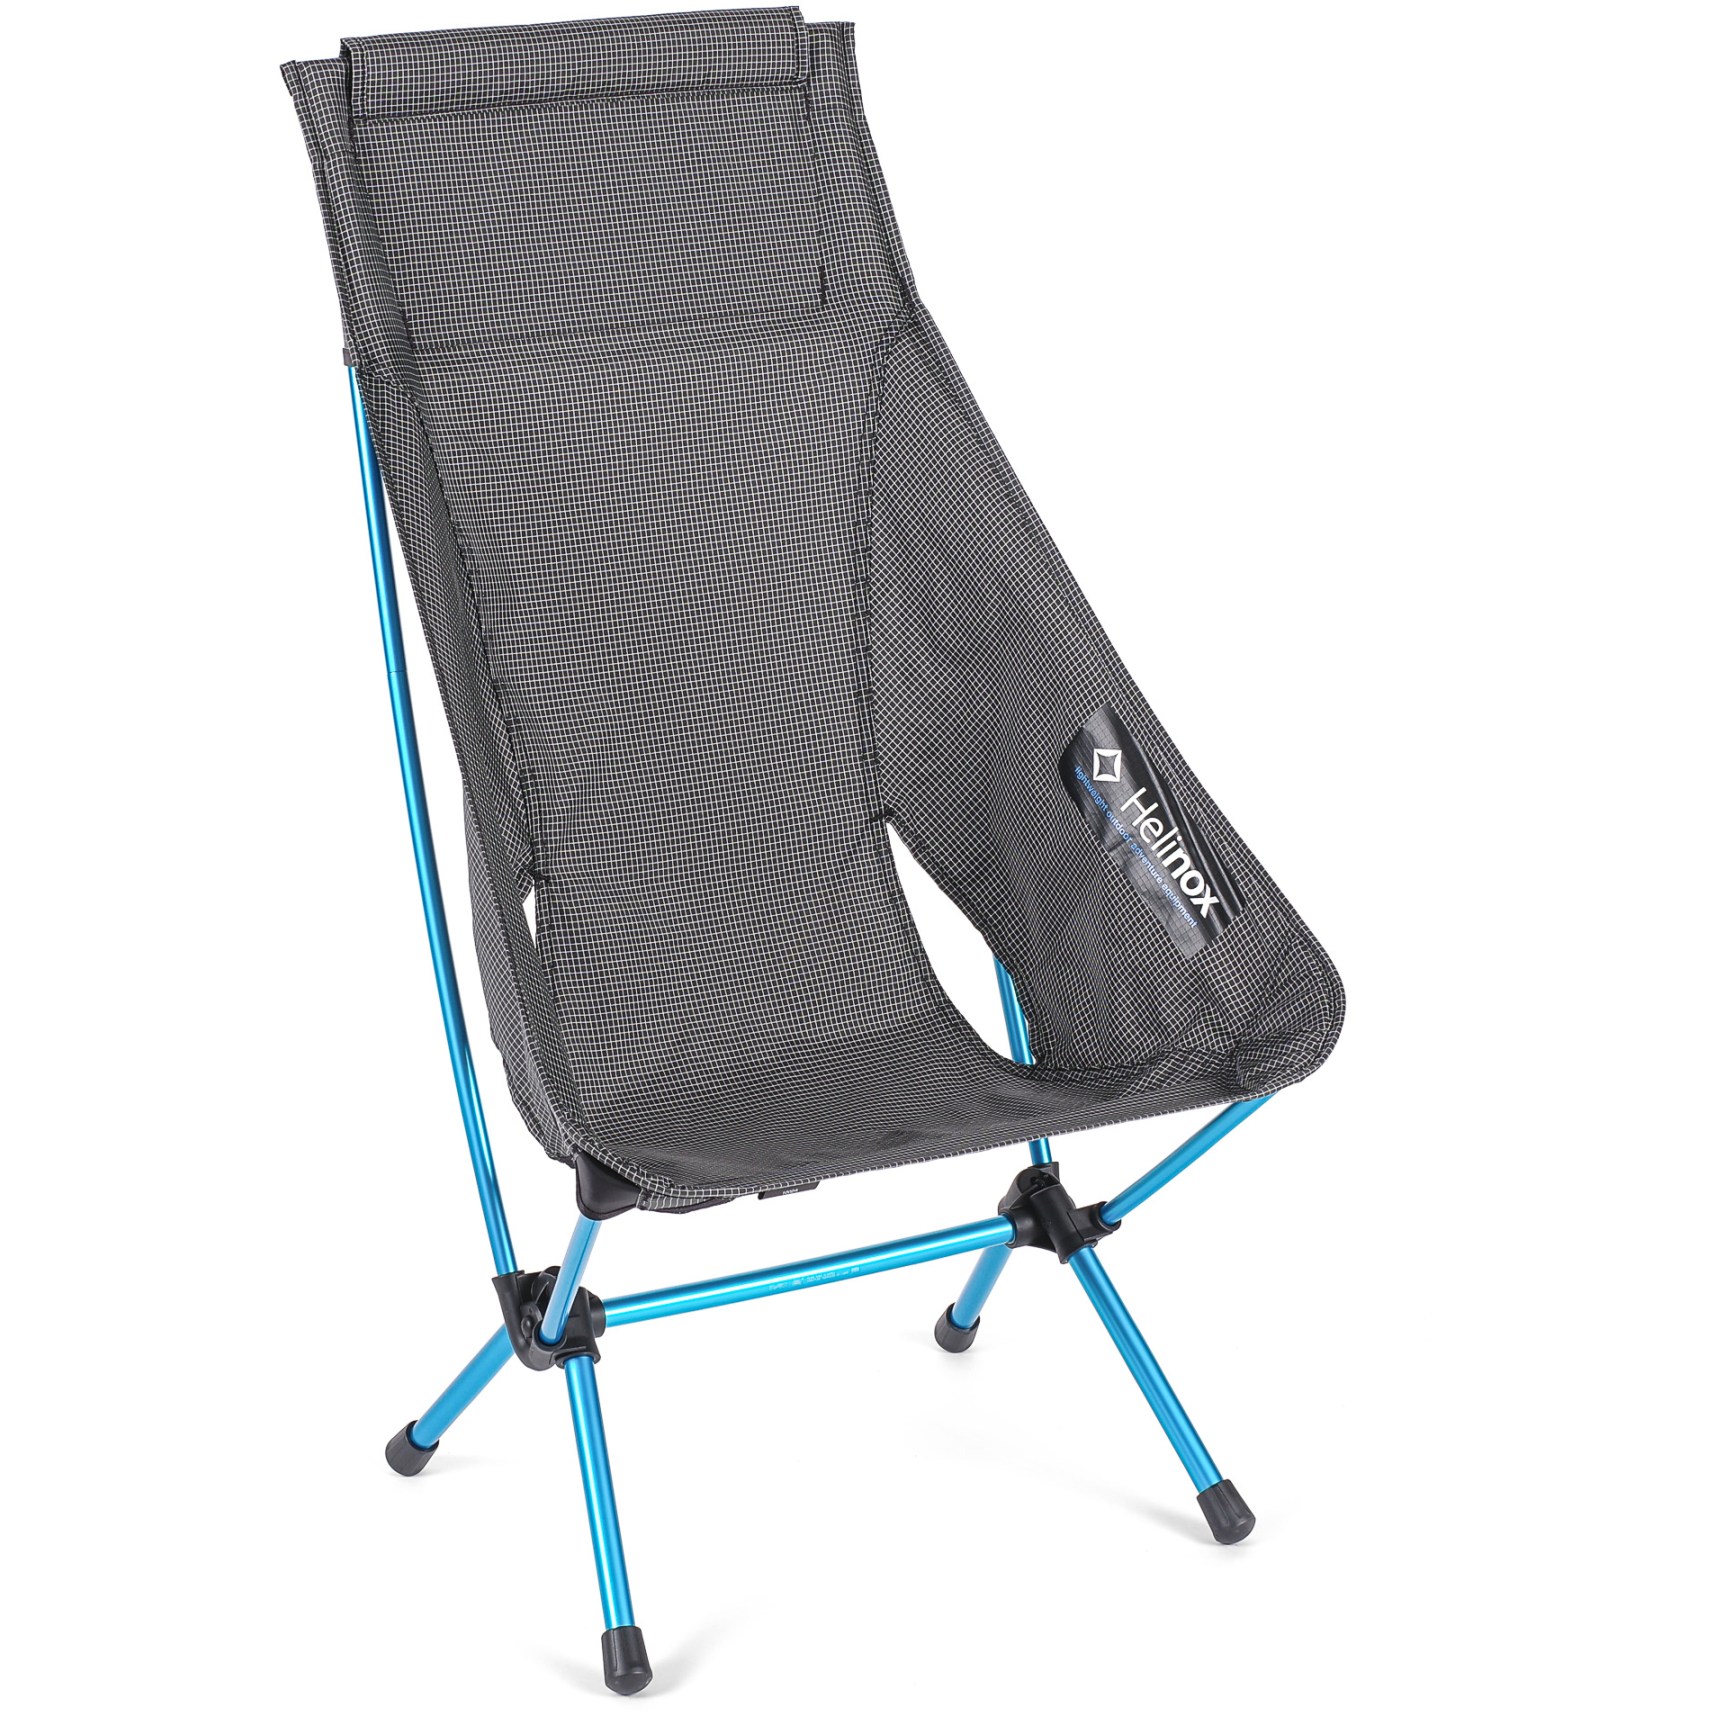 Productfoto van Helinox Chair Zero High Back Camping Chair - black - cyan blue